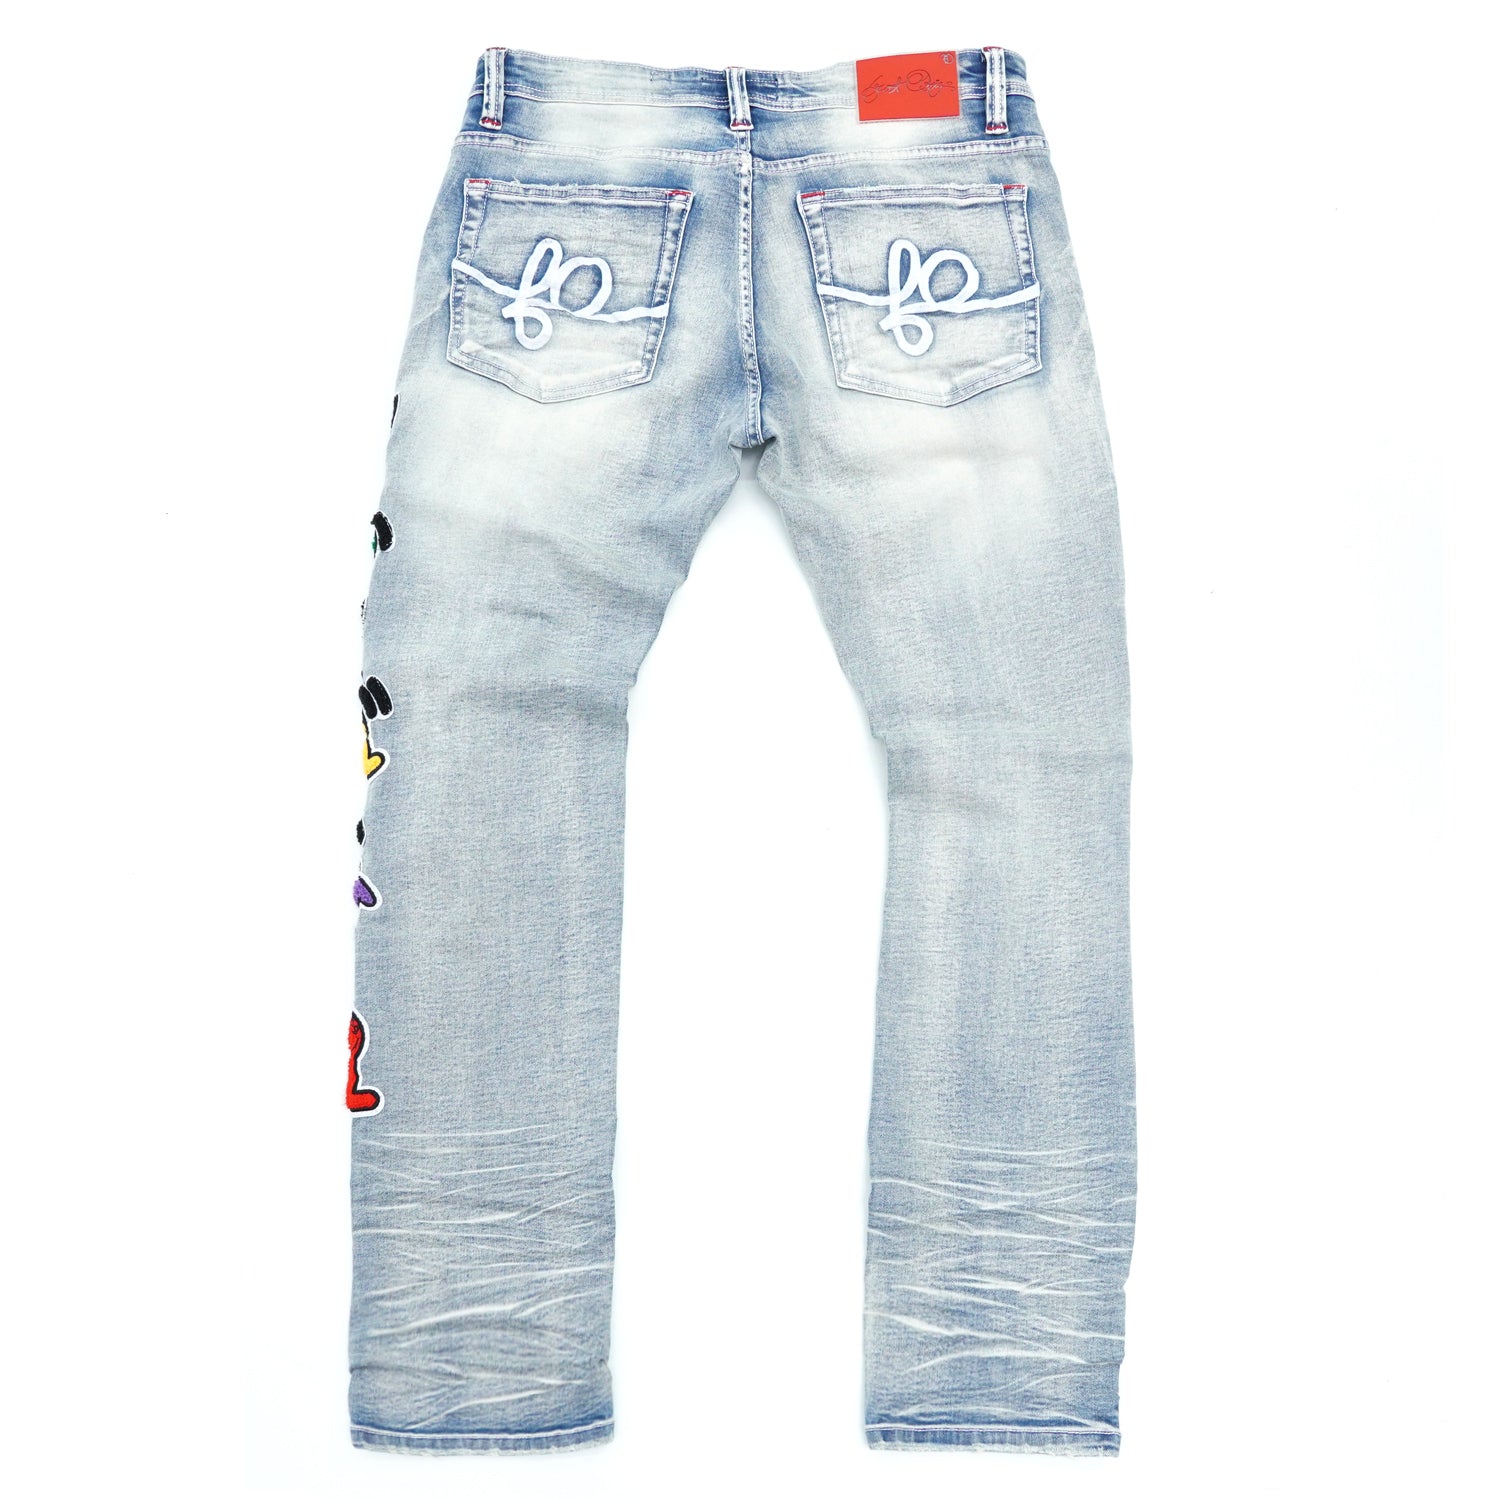 F1750 Frost Money Dance Denim Jeans - Light Wash